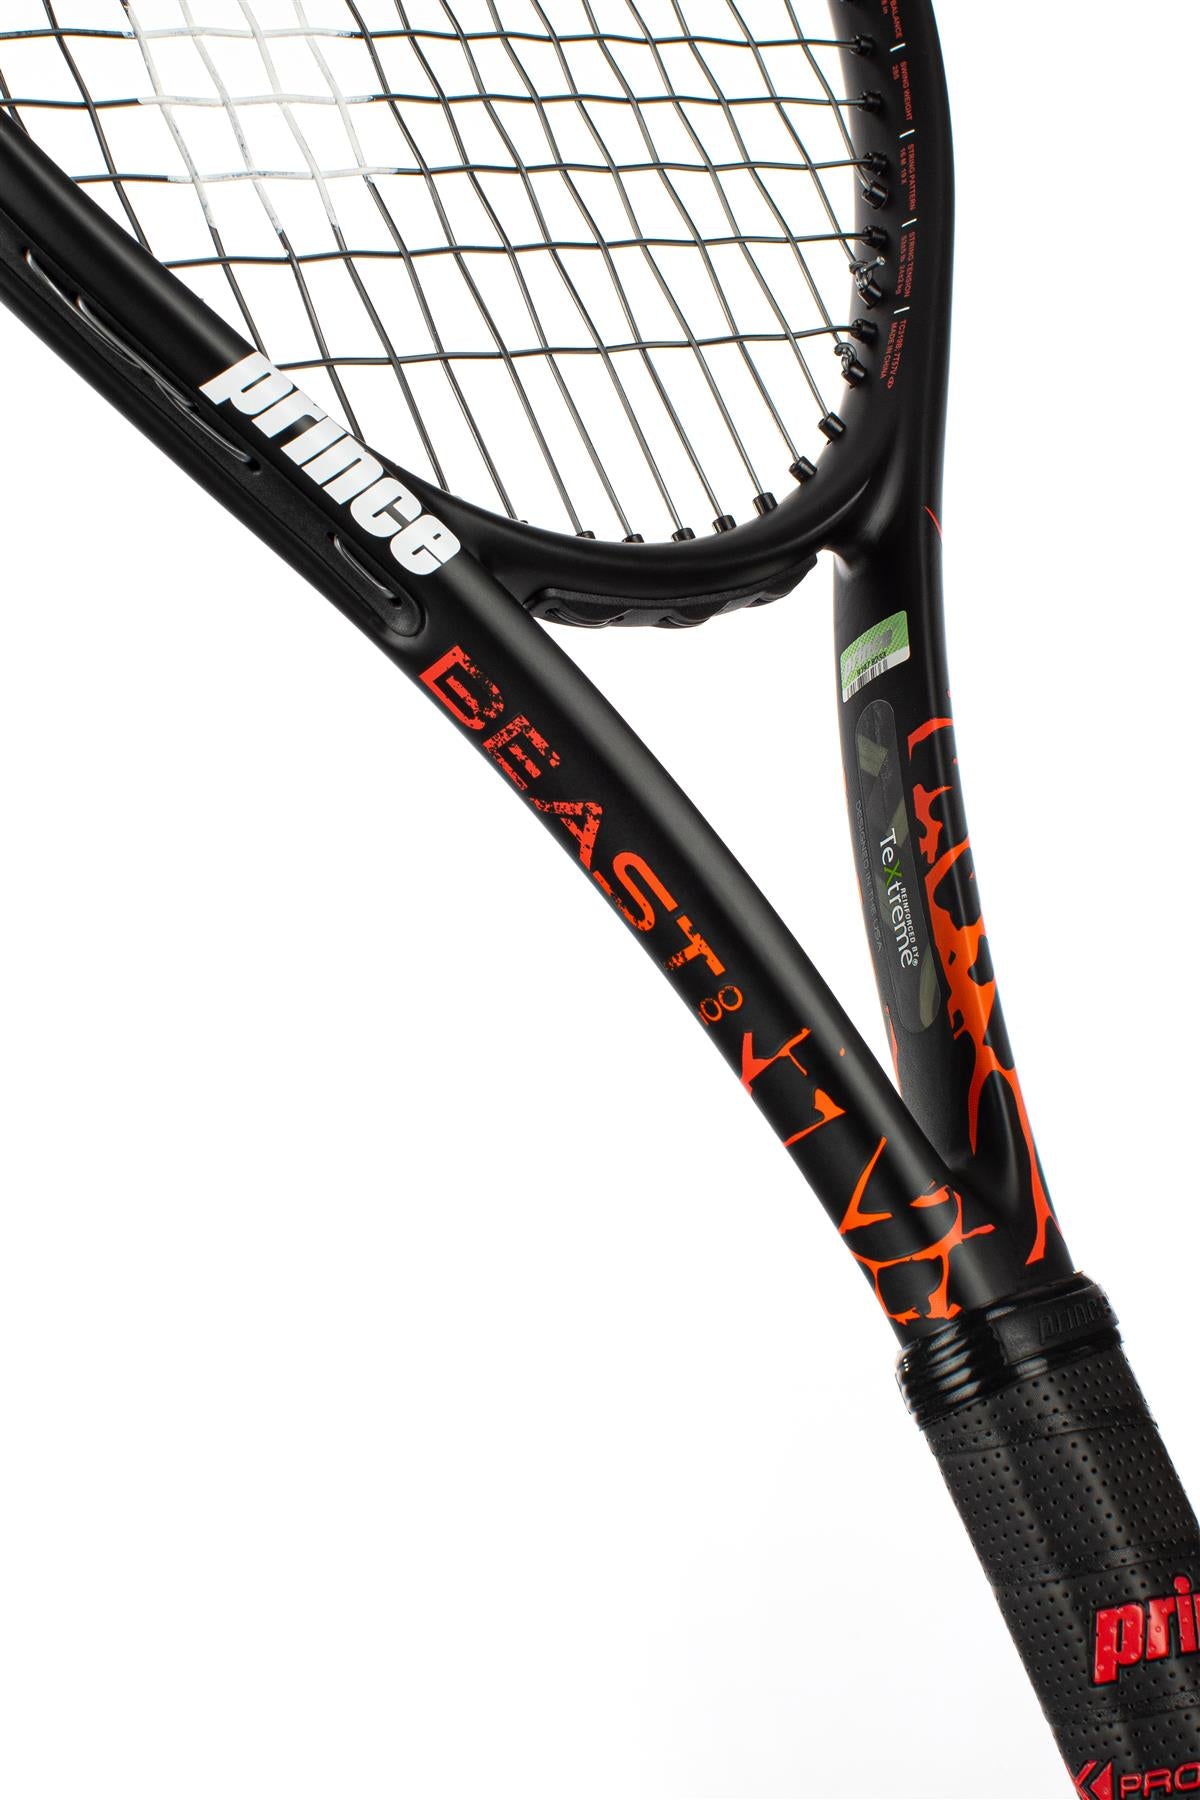 Prince Beast 100 300g Tennis Racket (Frame Only) - Black